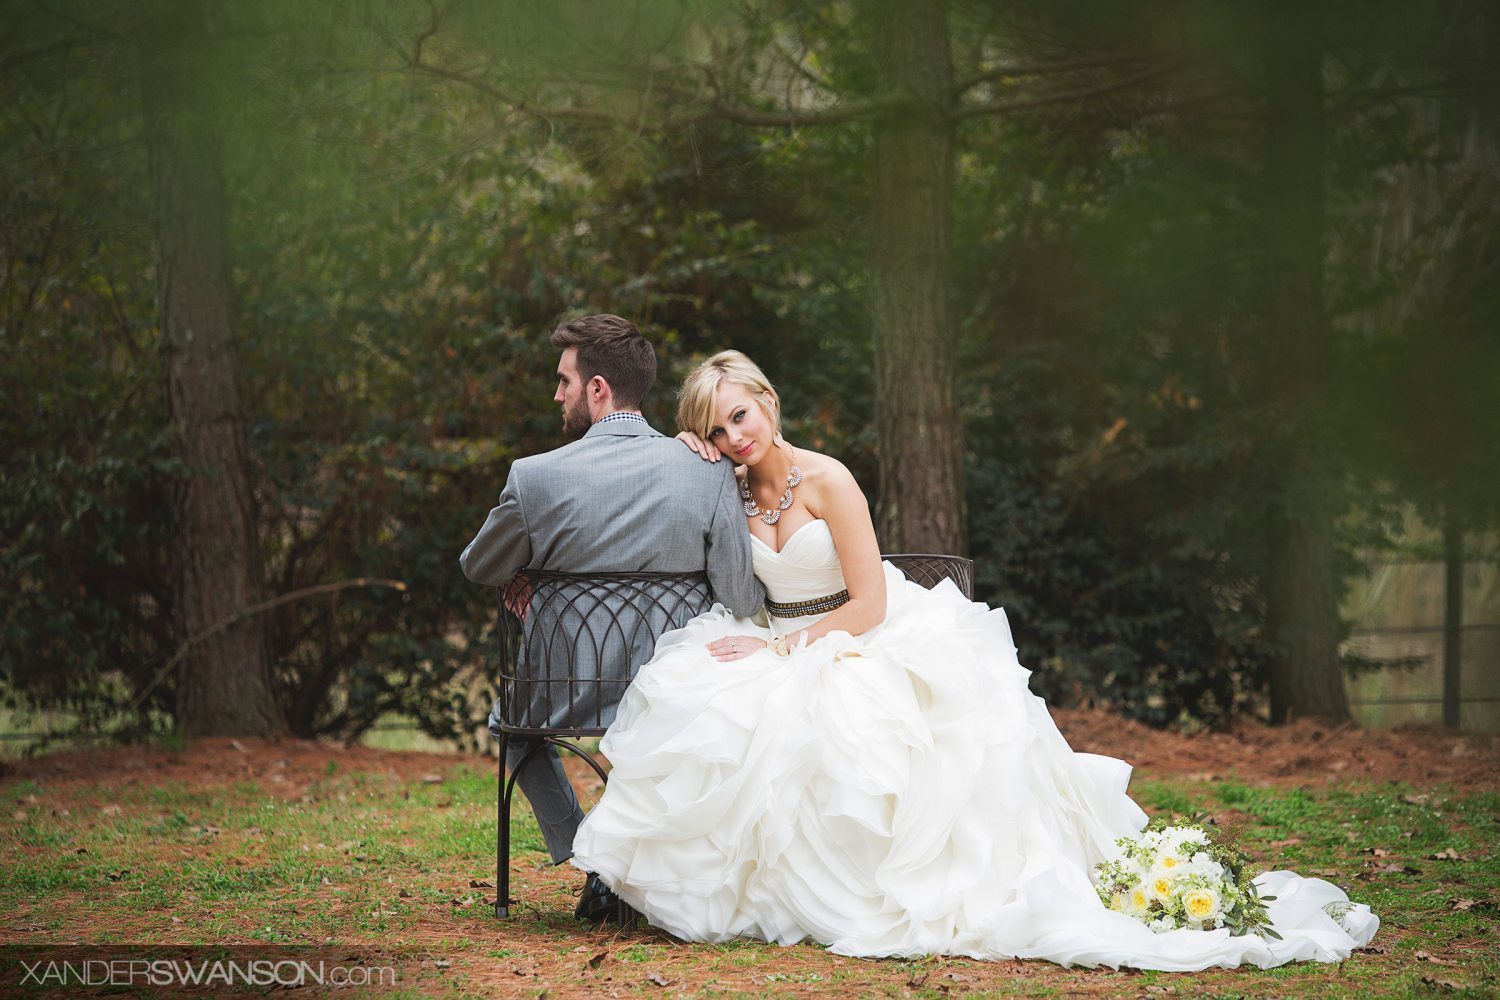 xander swanson, photography, wedding photography, texas photography, wedding, bride, wedding blog, southern bride, southern wedding